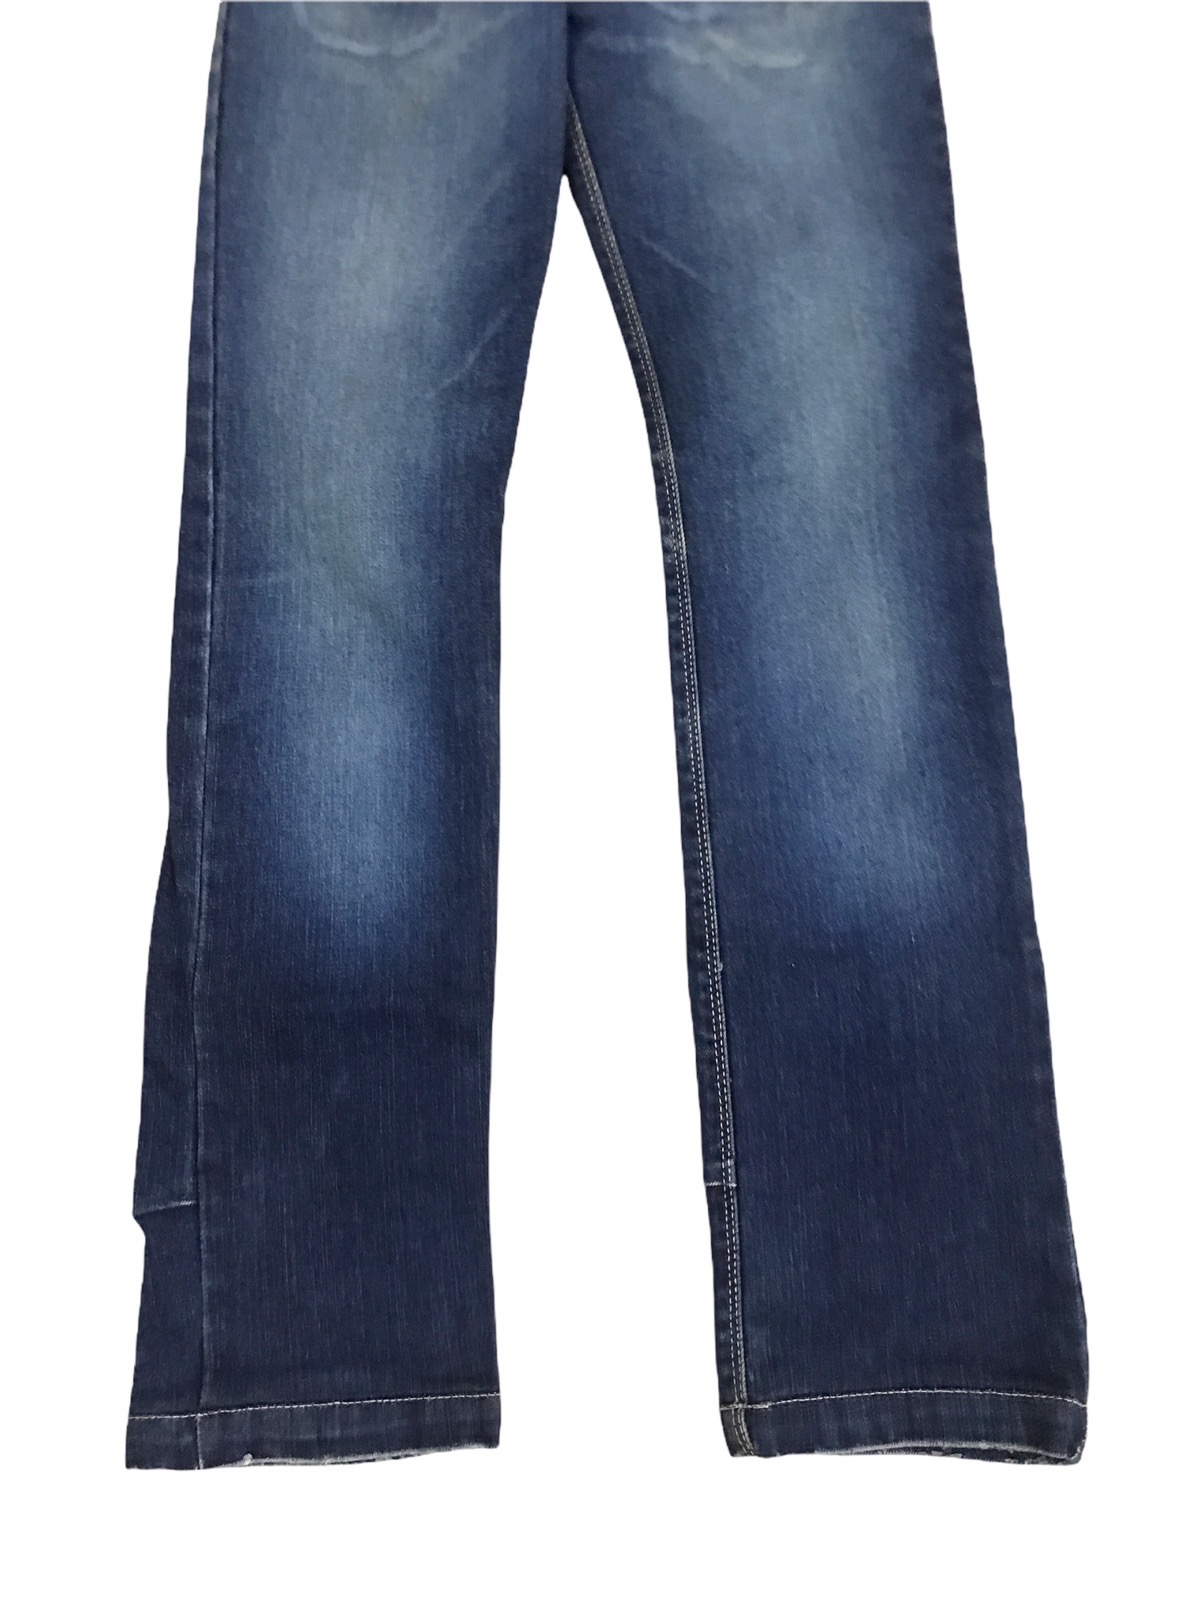 Ksubi Distressed Jeans - 6